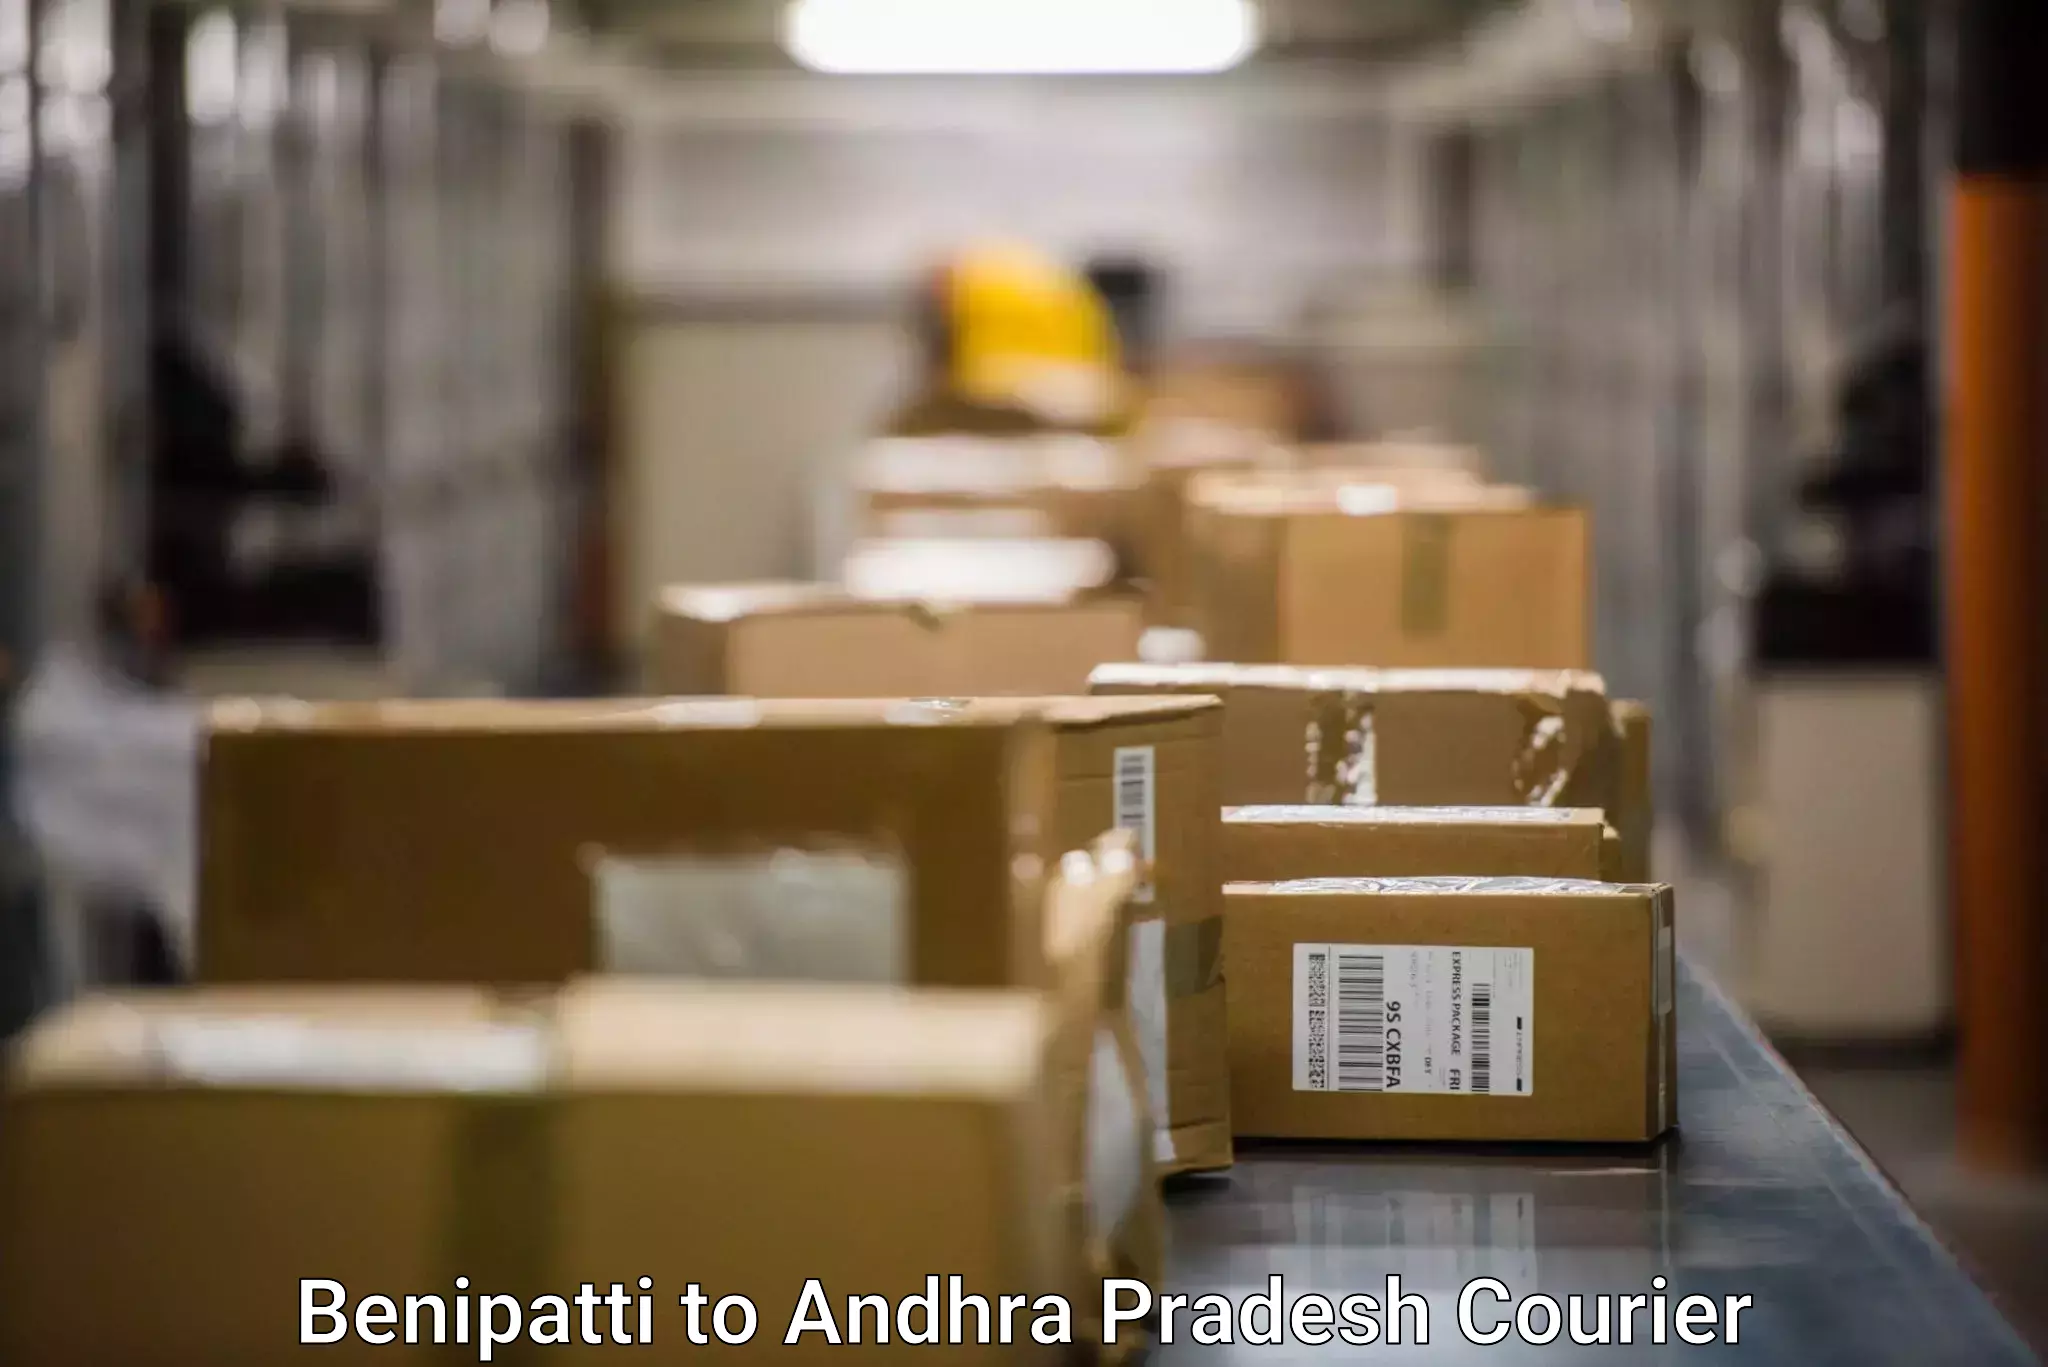 Logistics service provider Benipatti to Tripuranthakam